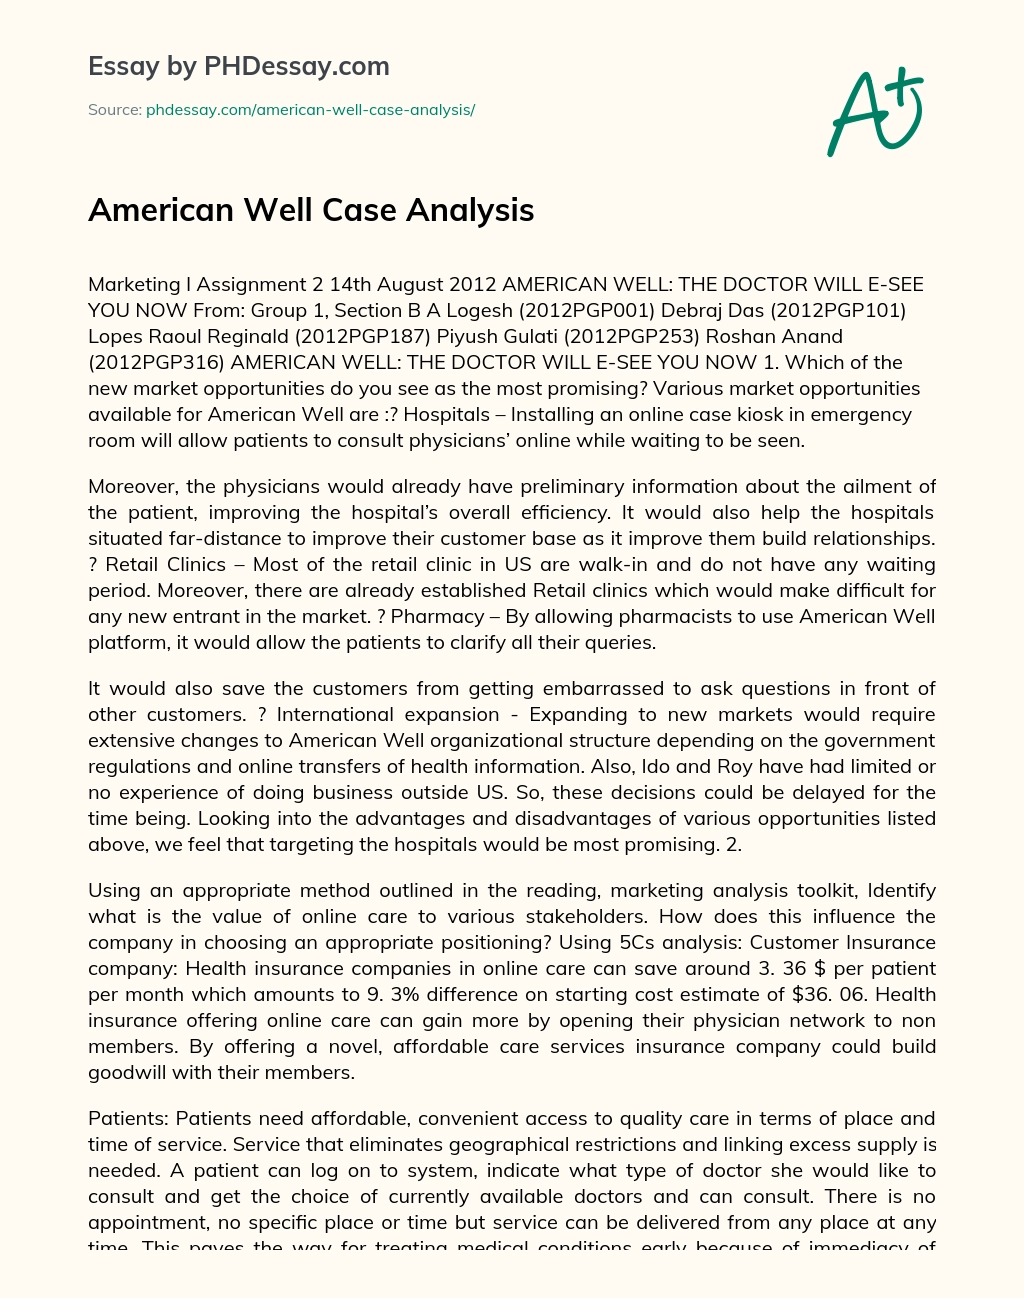 American Well Case Analysis essay